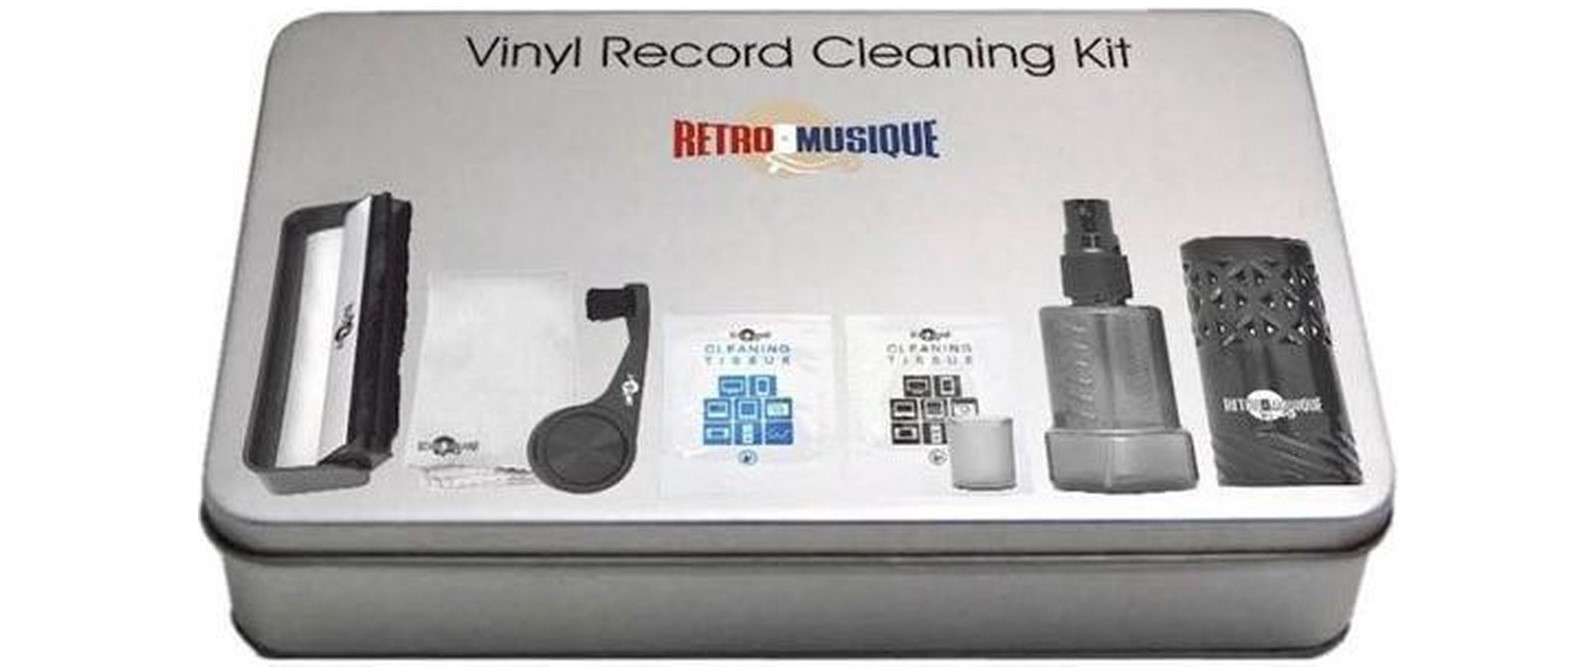 Vinyl Record Cleaning Kit - 33RPM